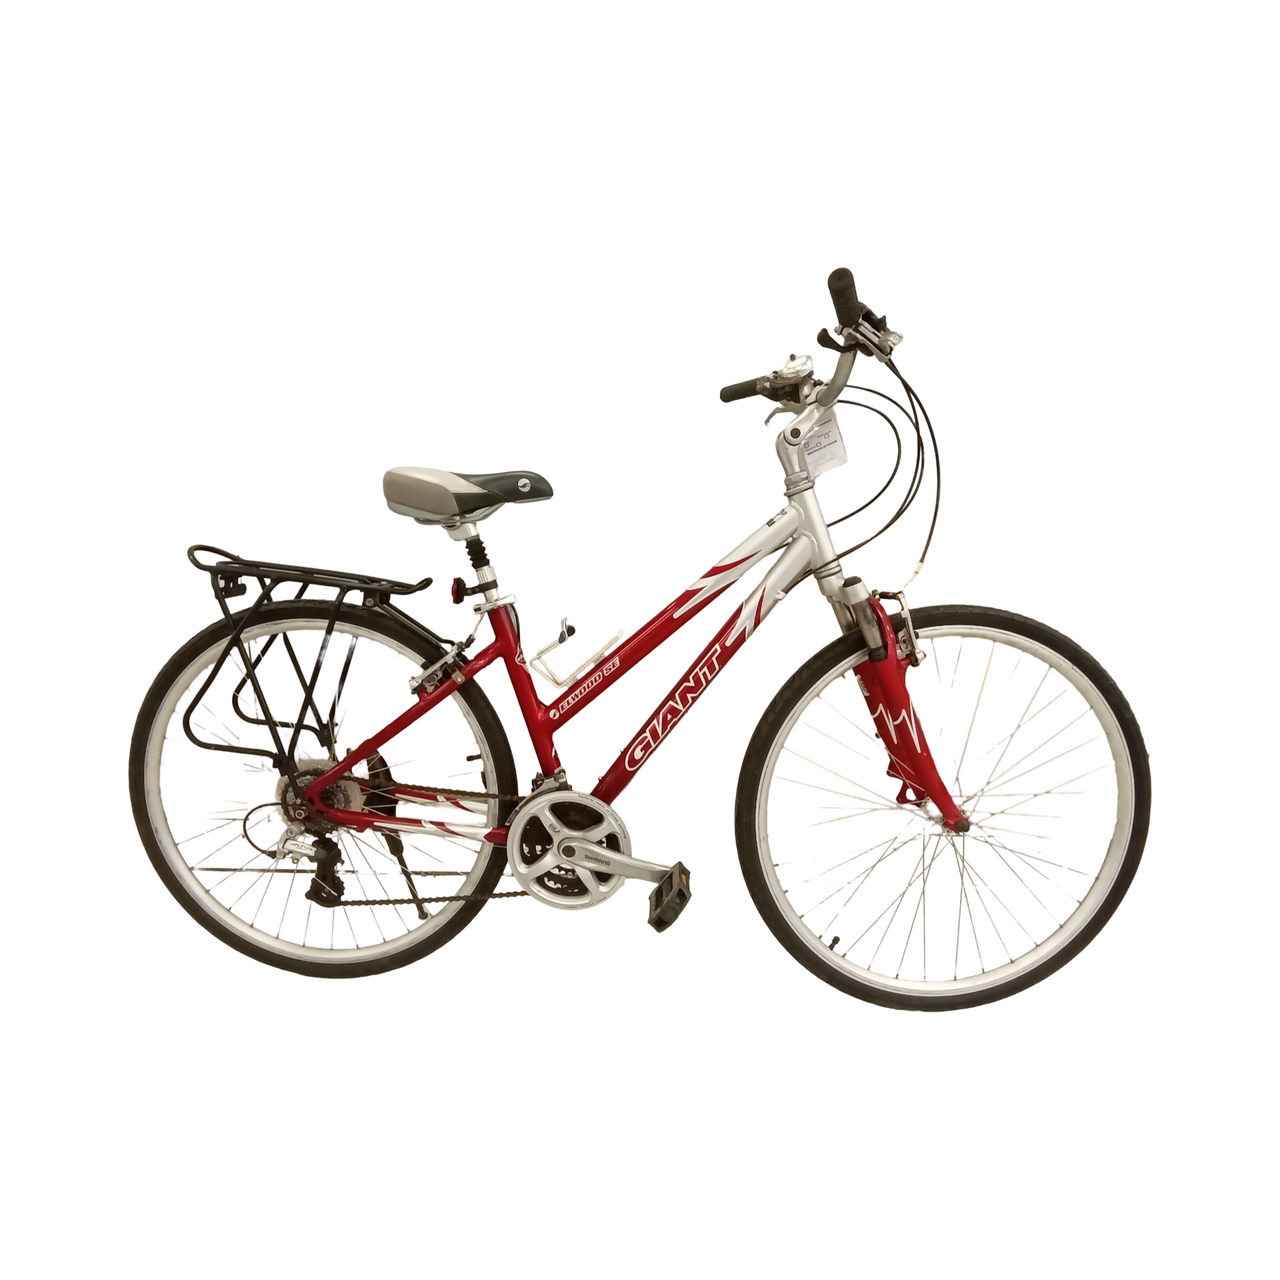 1852 - 46cm Silver,
Red, Hybrid Commuter, Bike